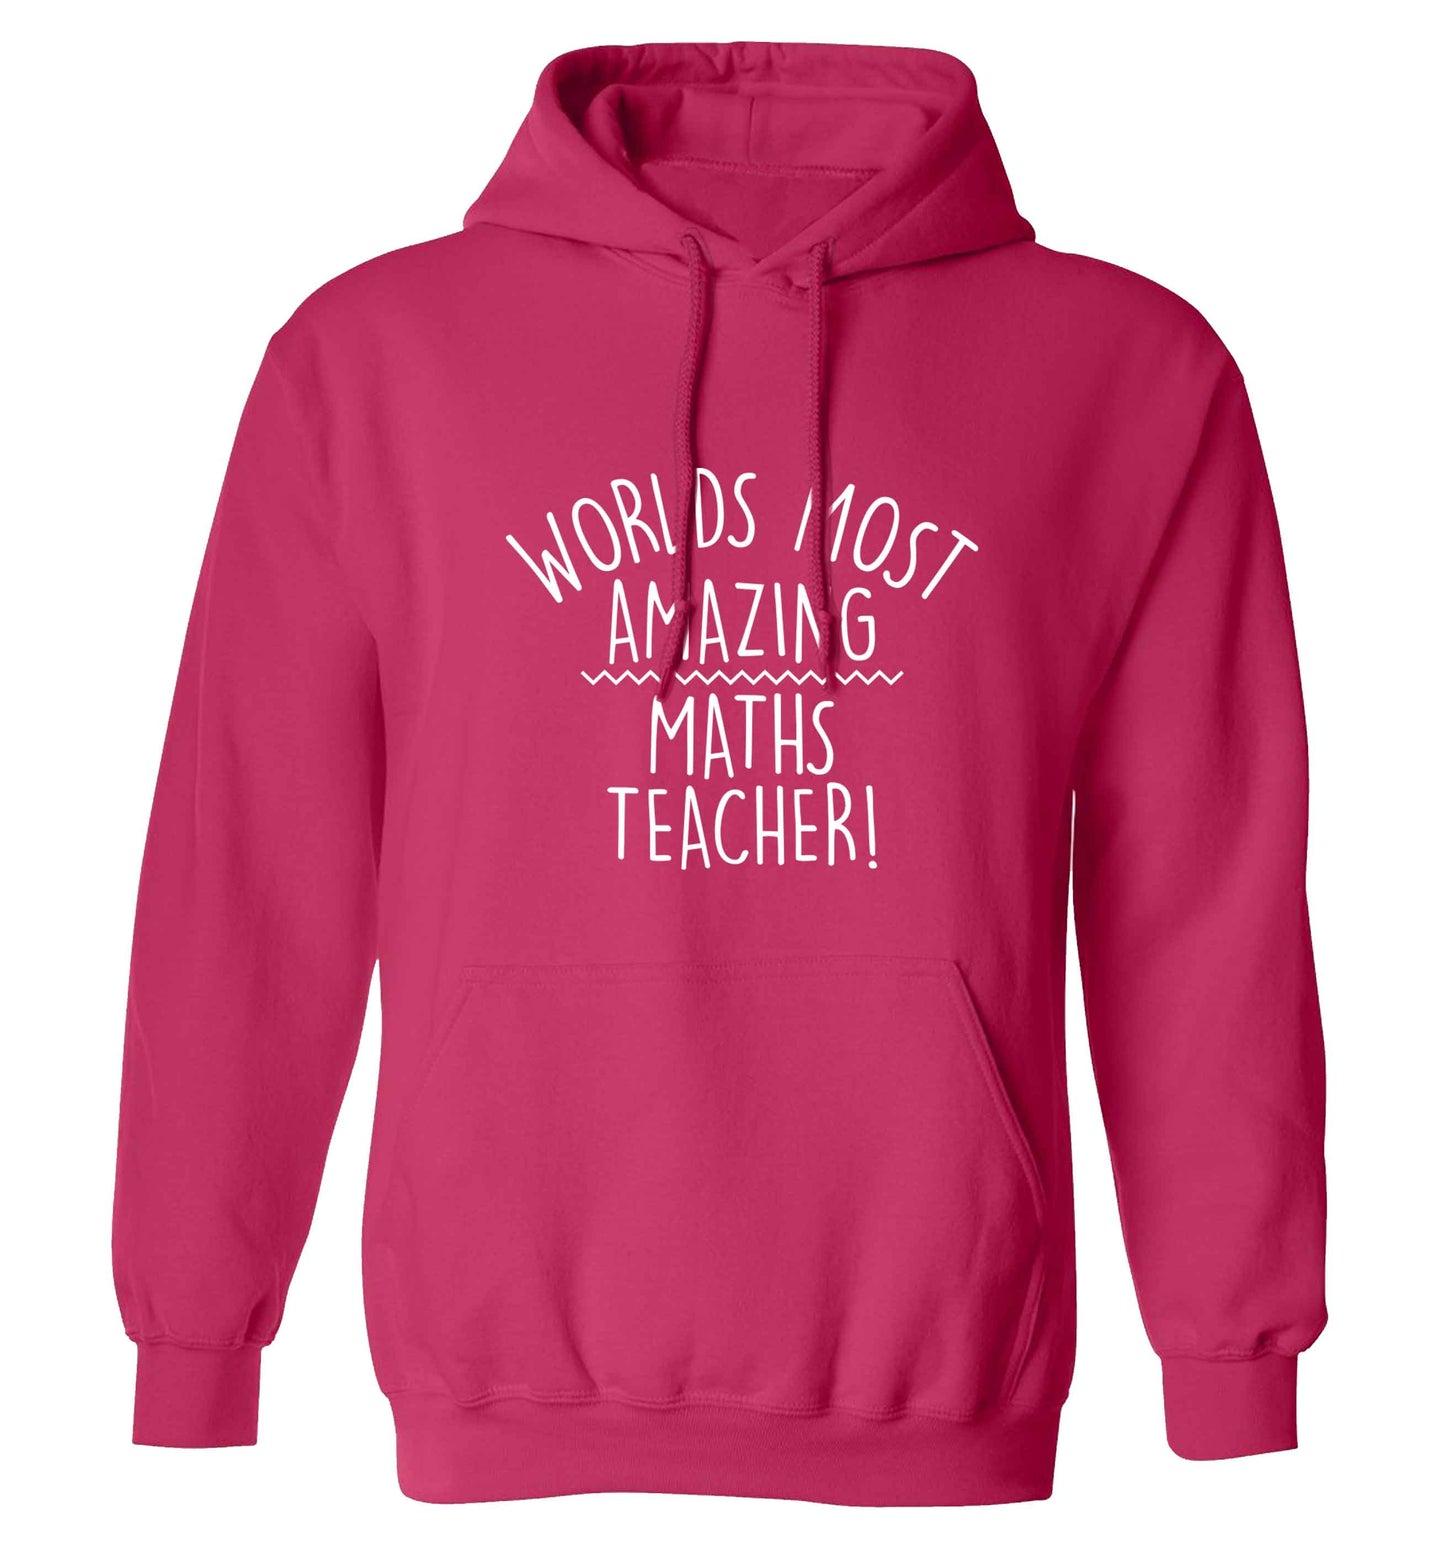 Worlds most amazing maths teacher adults unisex pink hoodie 2XL